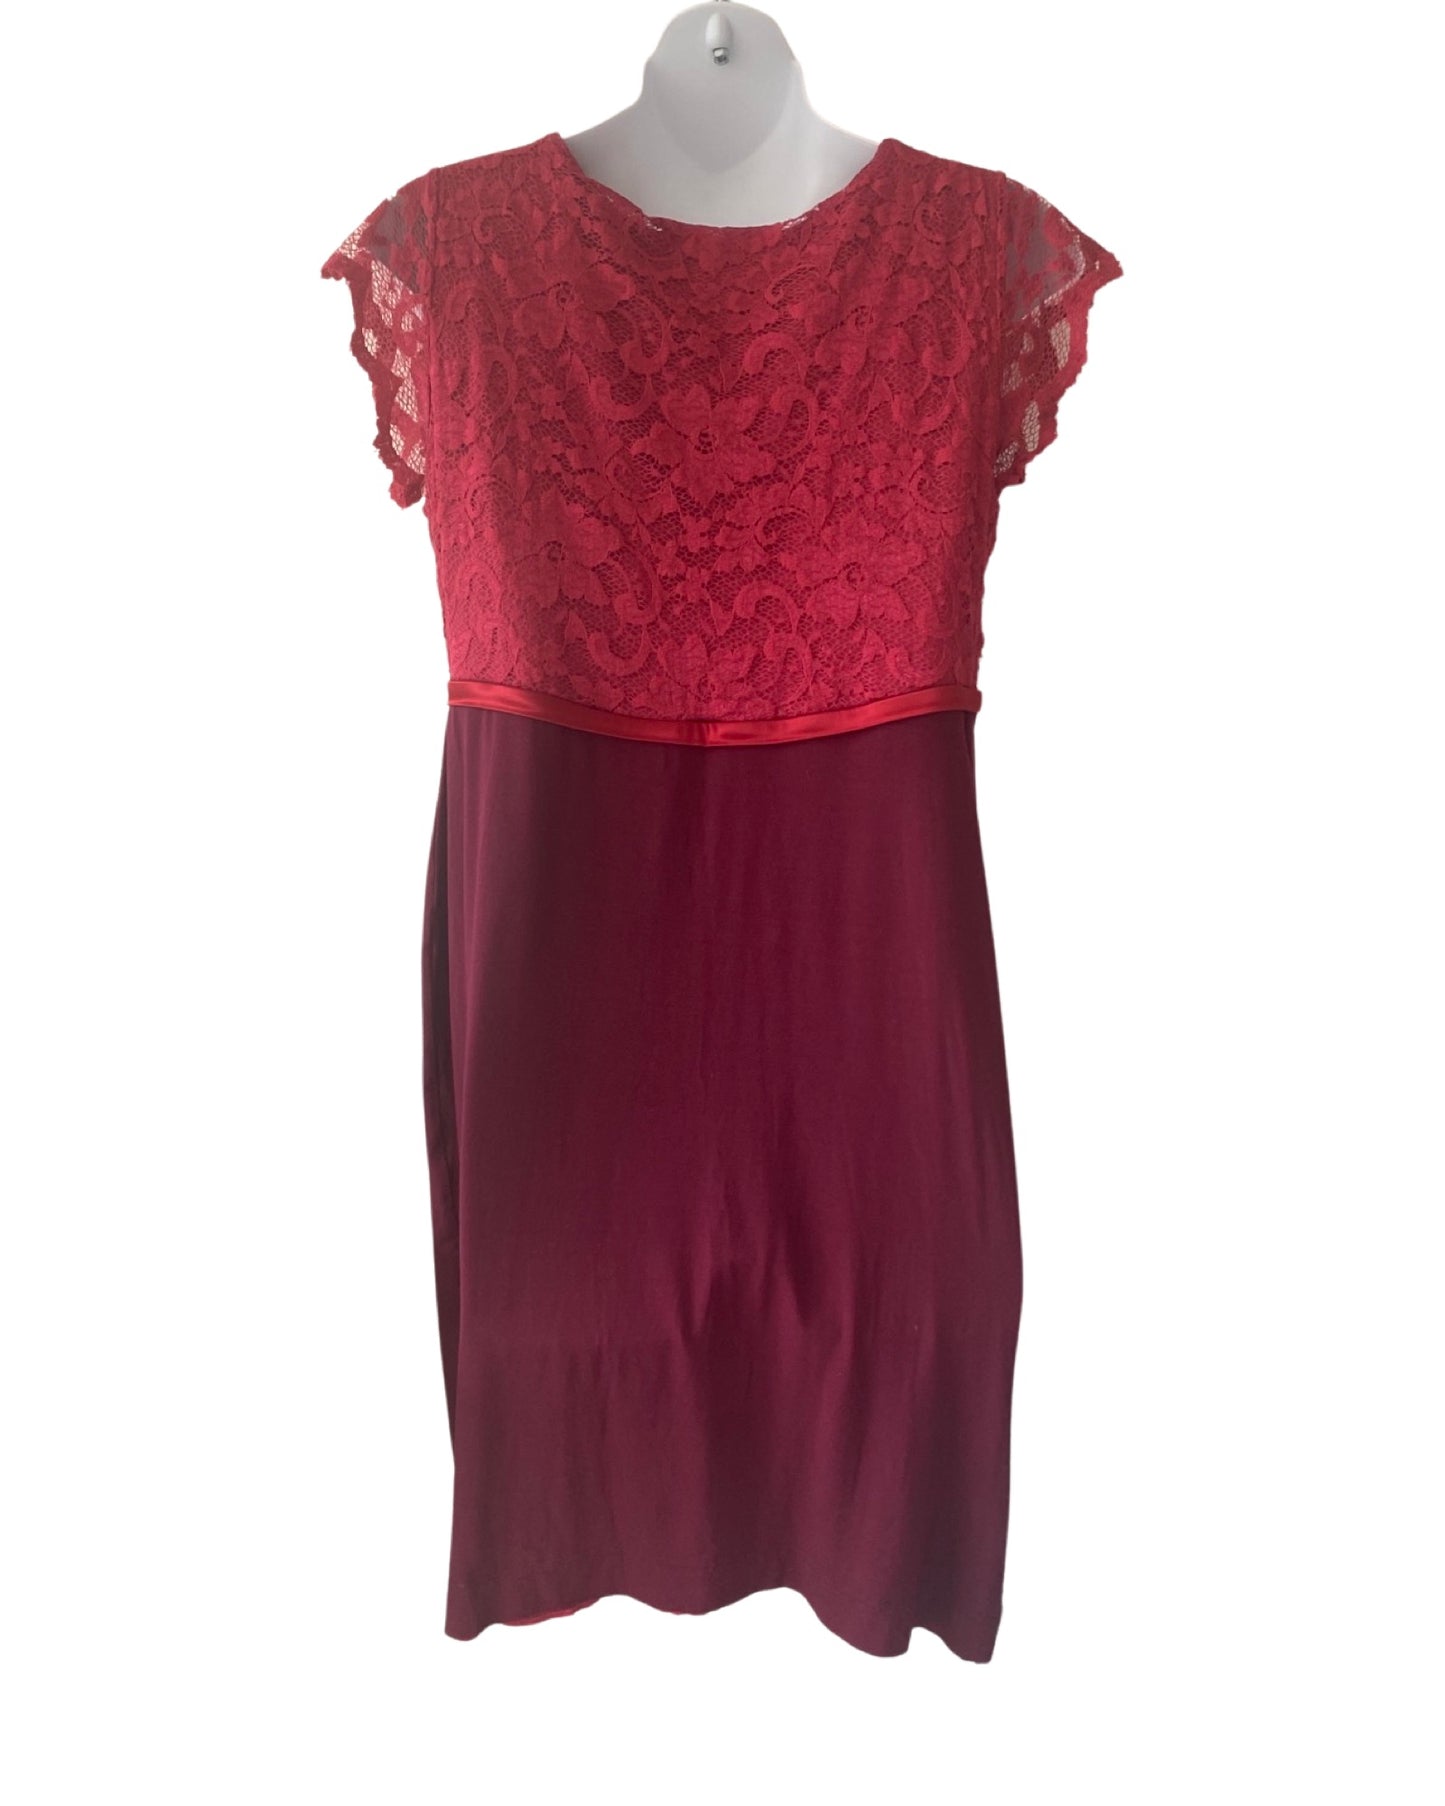 Tiffany Rose maternity jersey/lace dress (size 12/14)